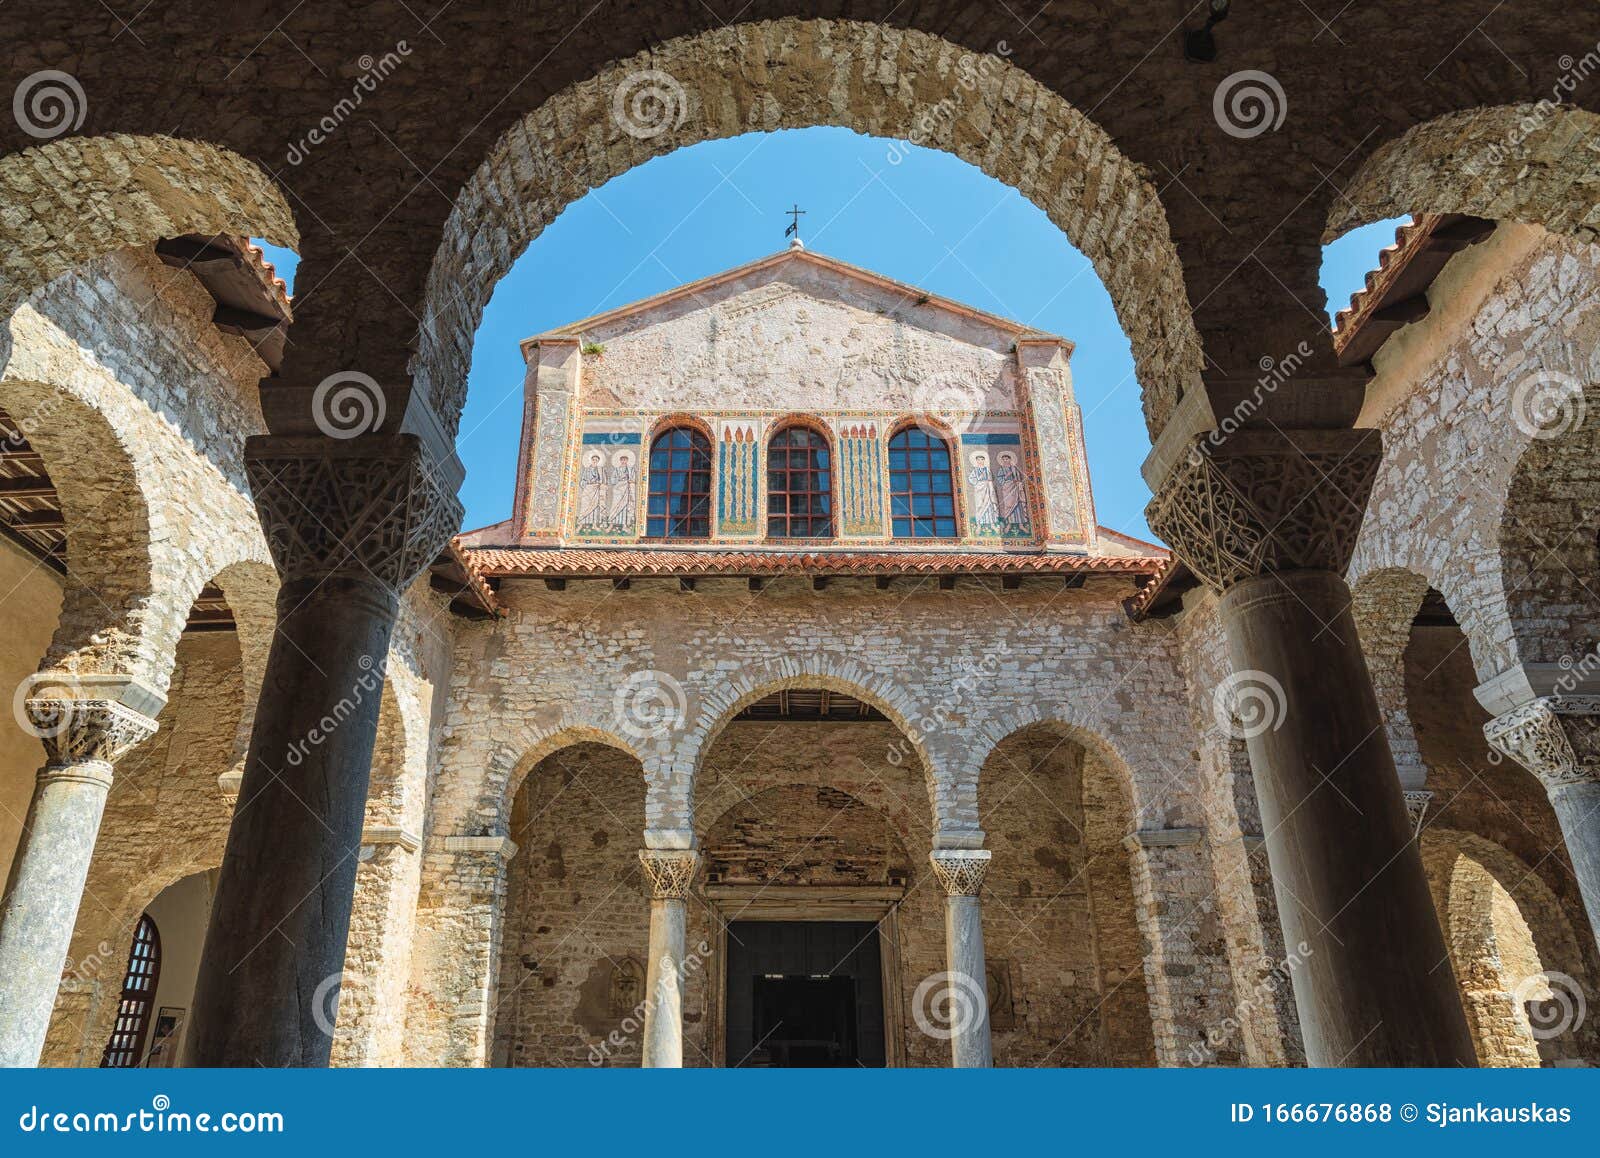 atrium of the euphrasian basilica in porec, unesco world heritage site, croatia